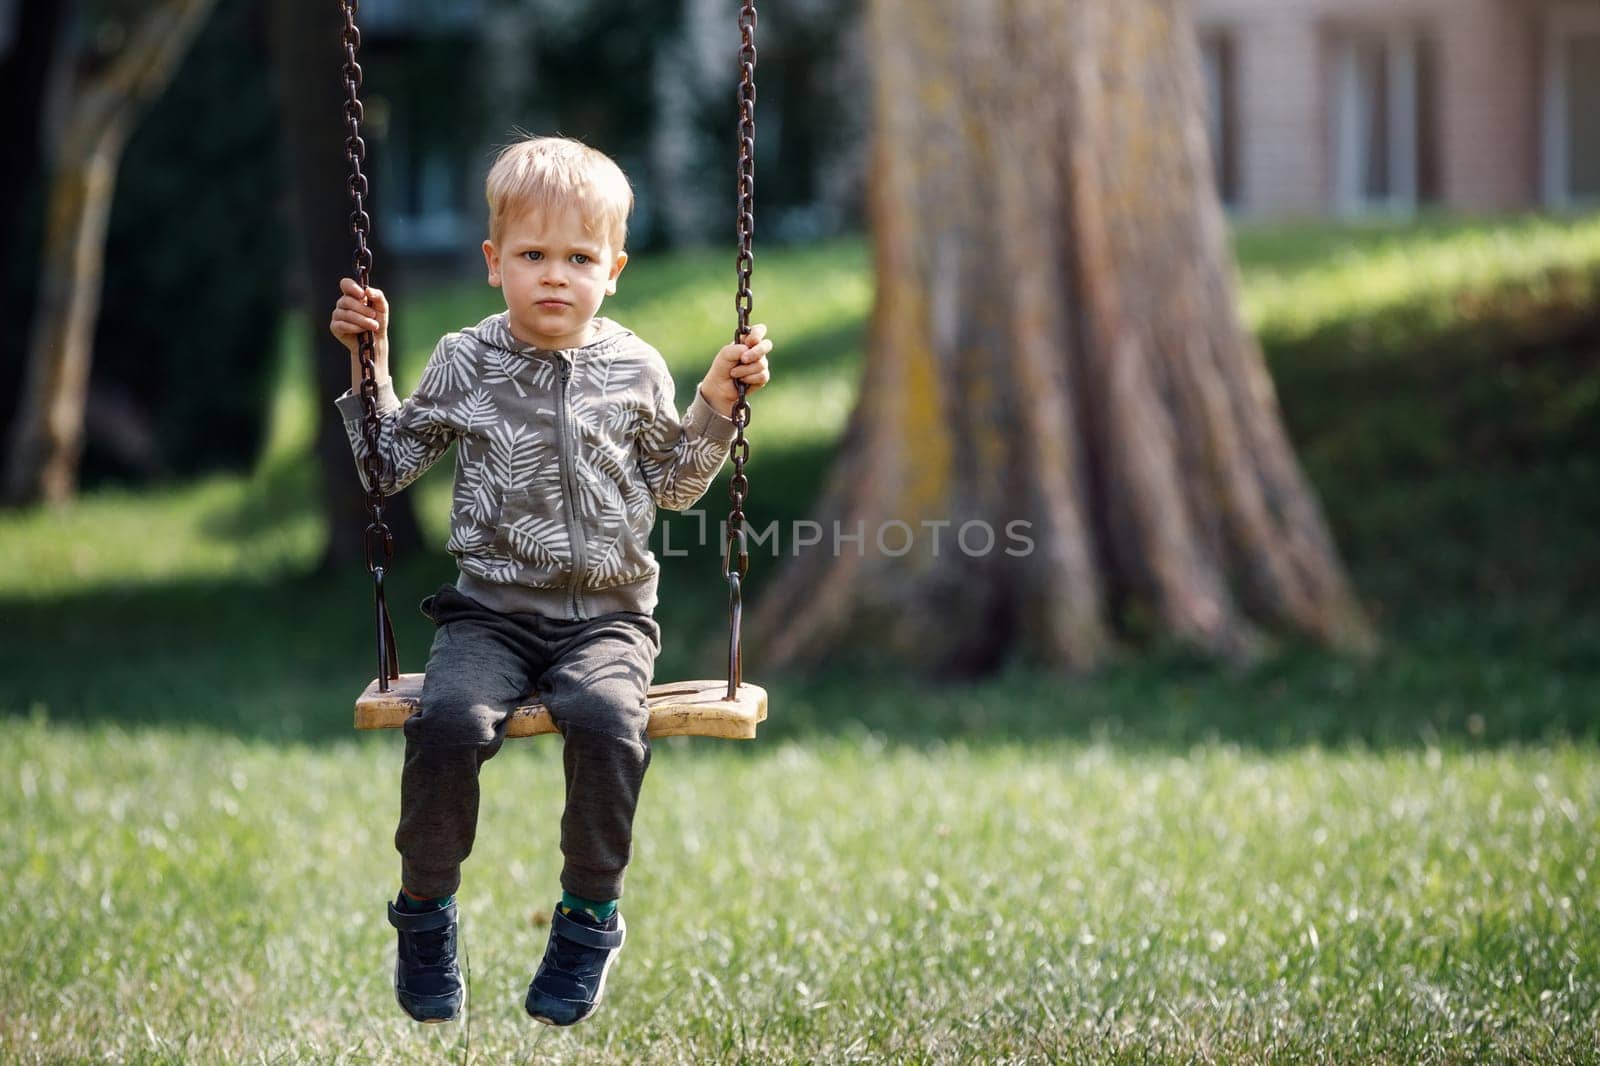 A sad, dreaming little boy swings in a city park under a big tree by Lincikas